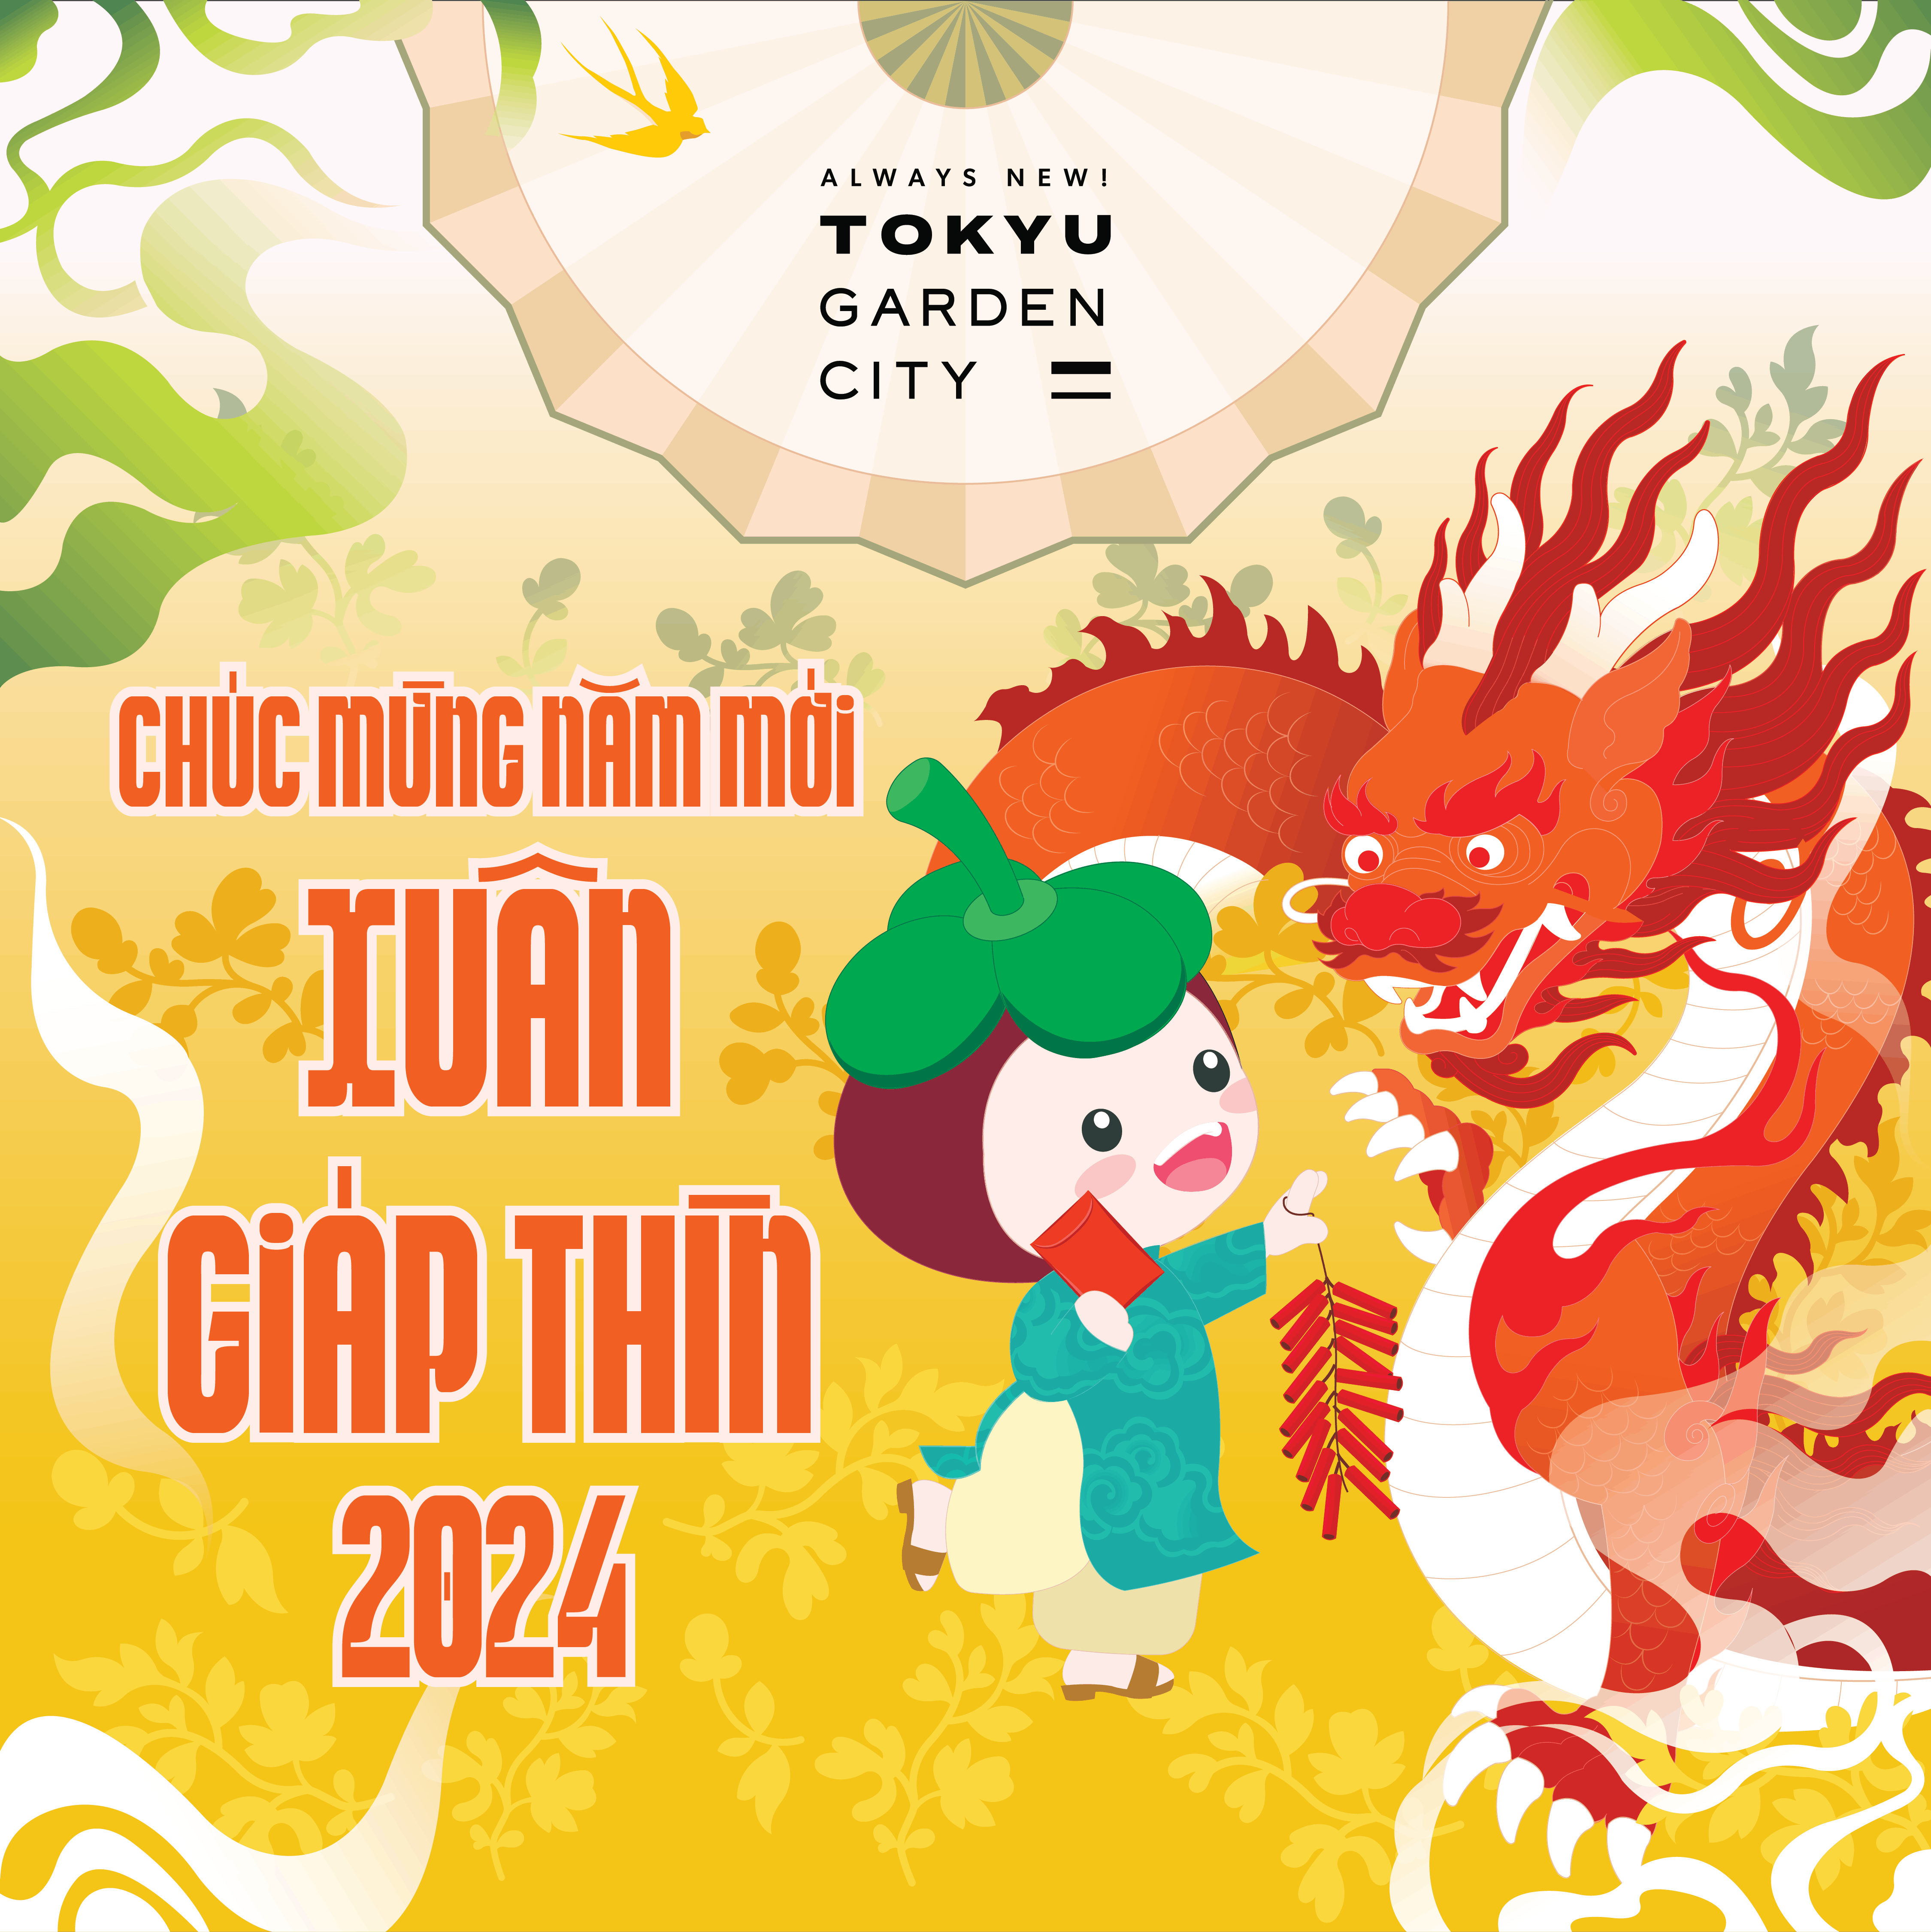 Happy Lunar New Year 2024 - Year of the Dragon!